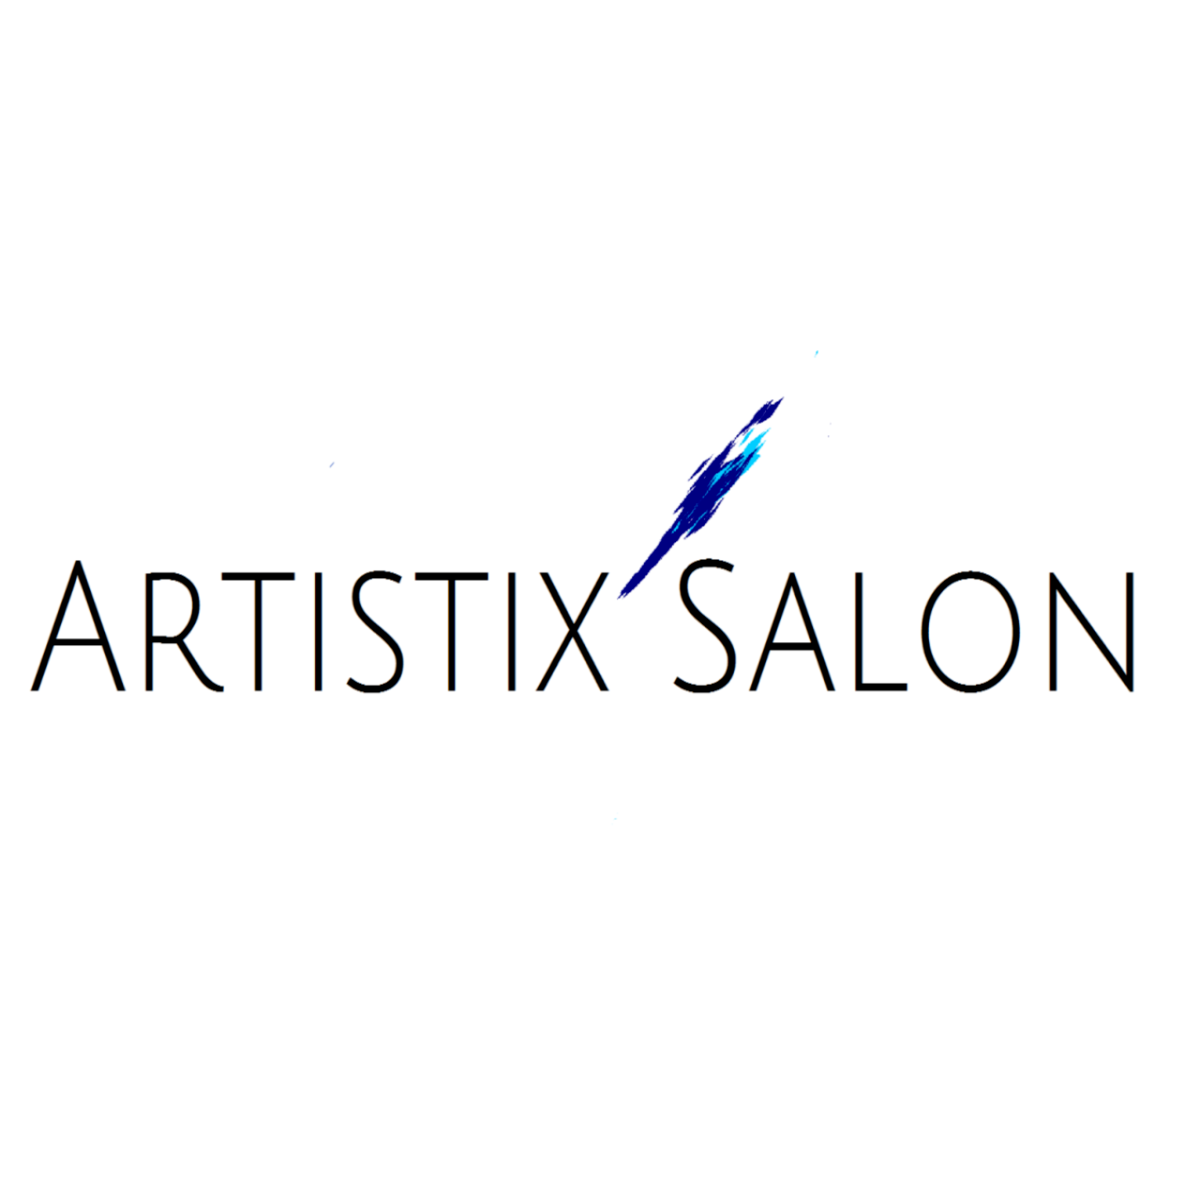 Artistix Salon - Homewood, IL 60430 - (708)647-9636 | ShowMeLocal.com